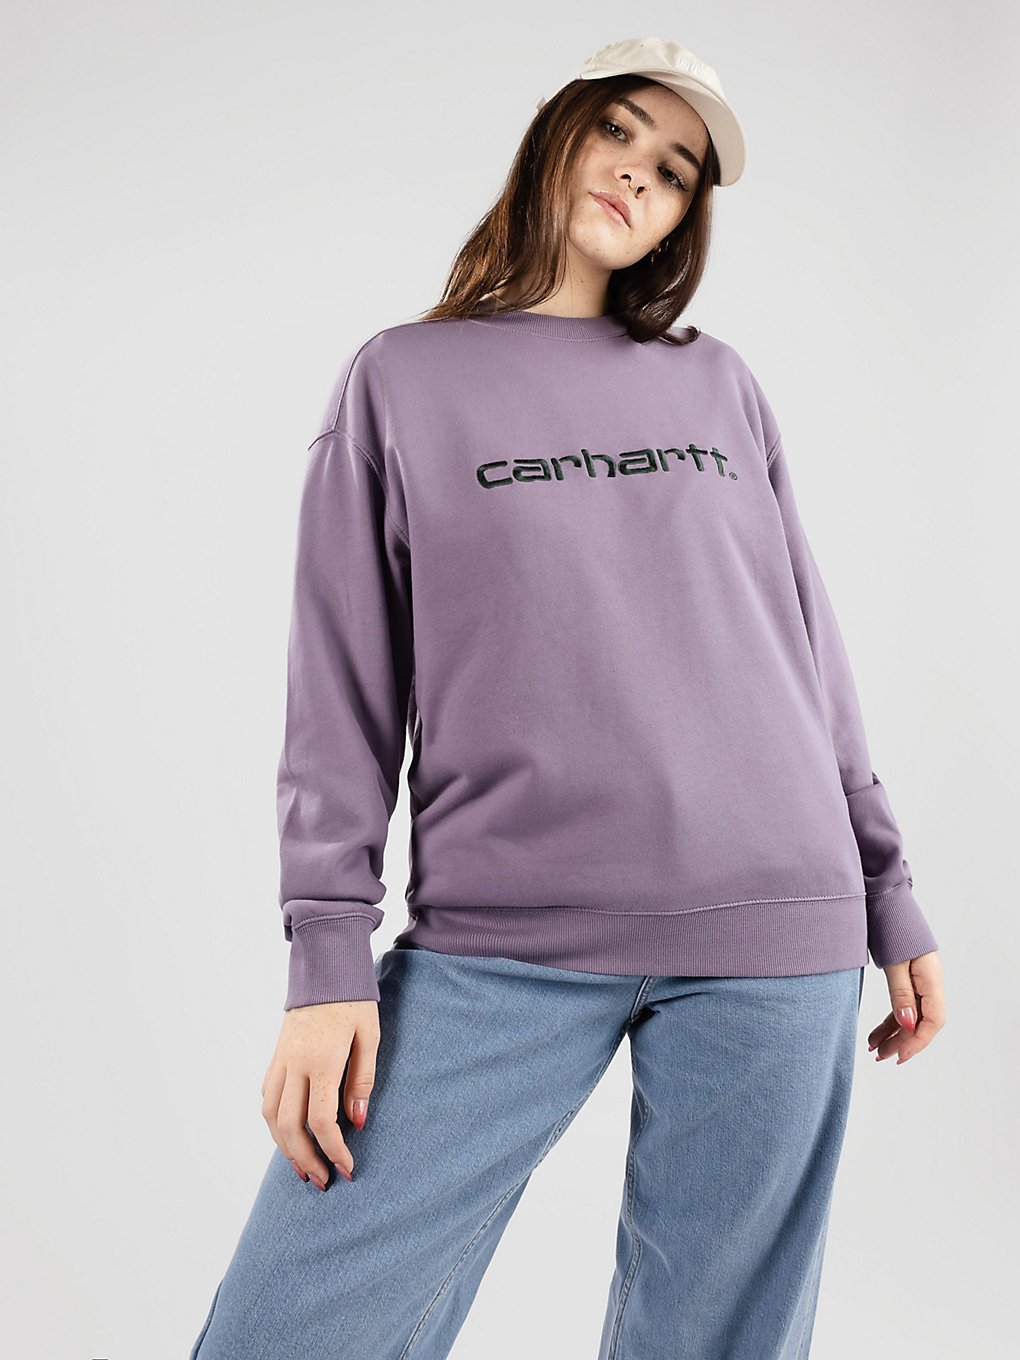 Carhartt WIP Carhartt Sweater discovery g kaufen